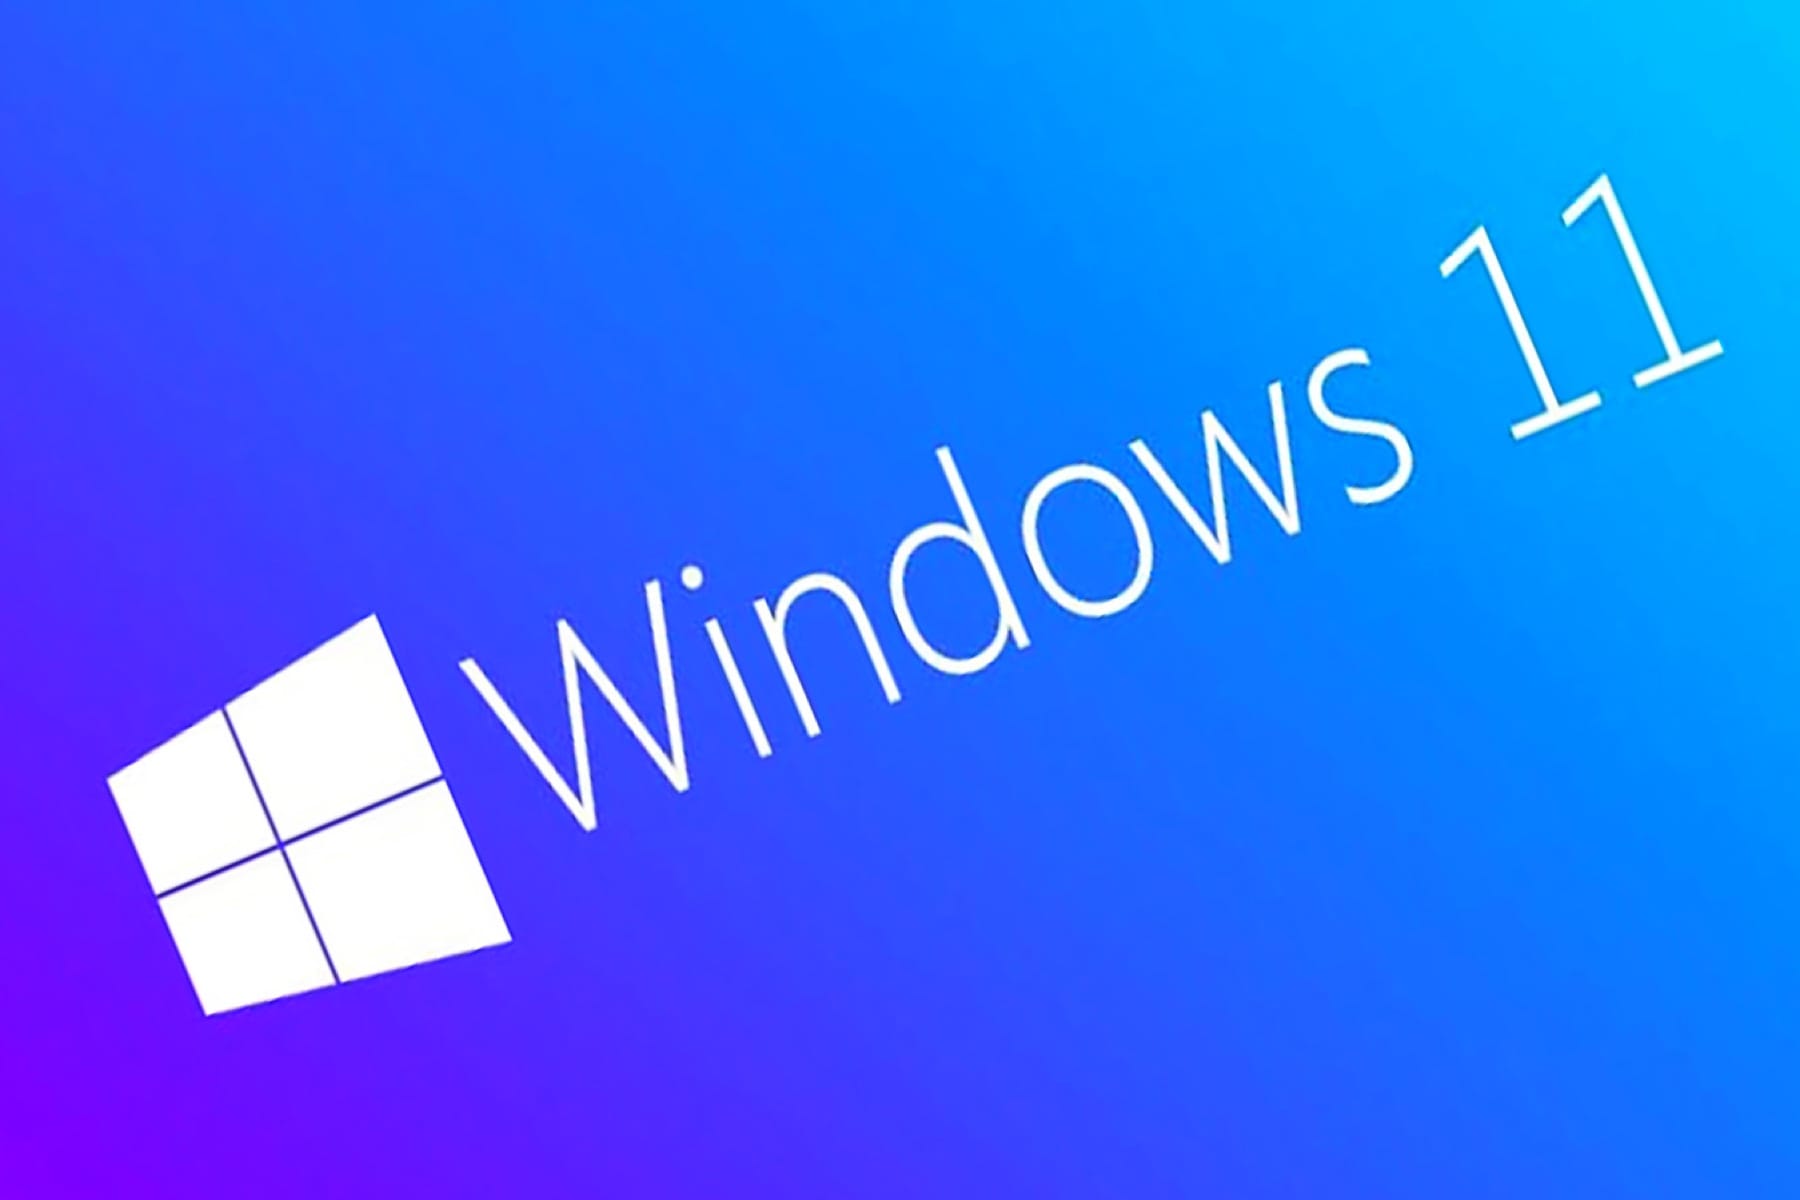 Windows 11 23h2 compact